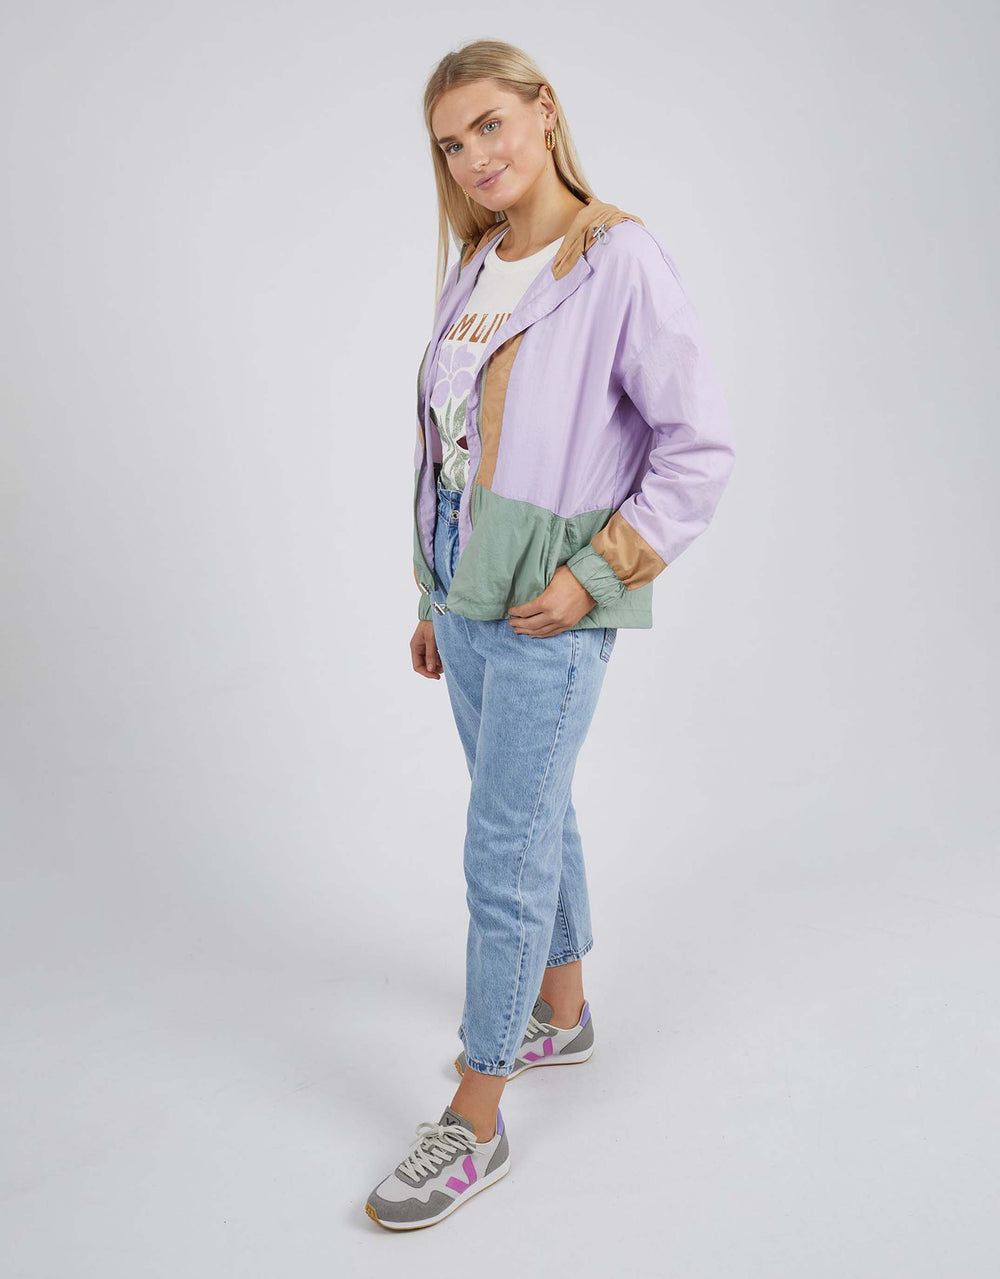 elm-emma-spray-jacket-lilac-womens-clothing